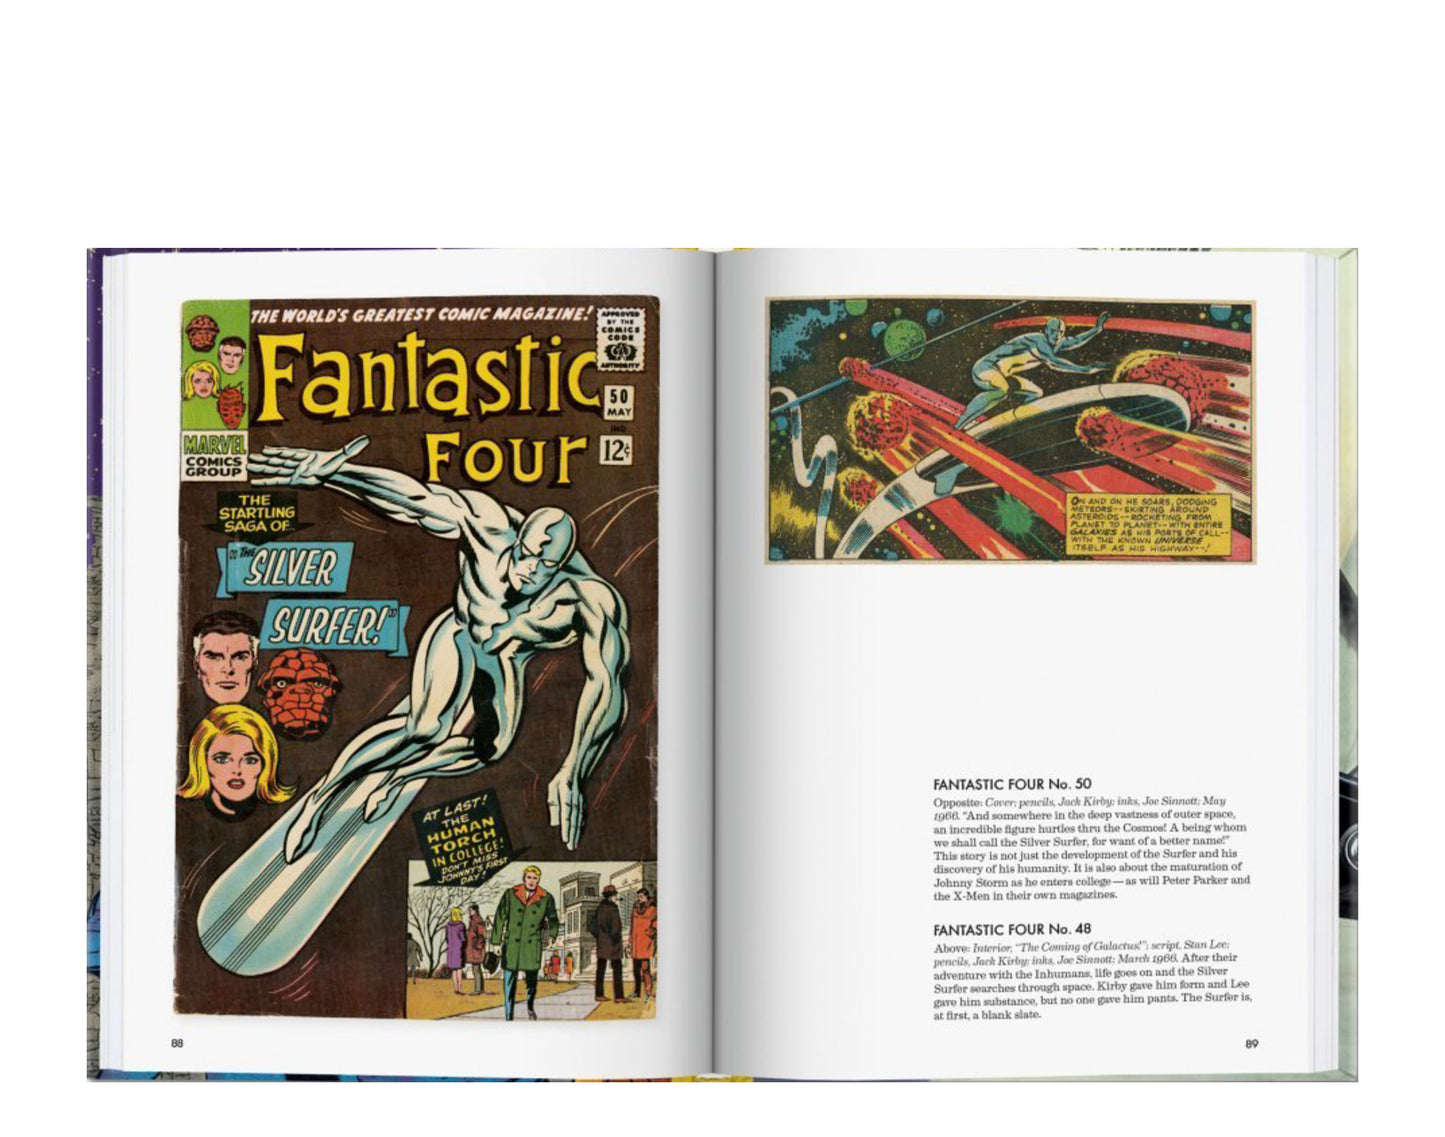 Taschen Books - The Little Book of Fantastic Four Flexicover Book